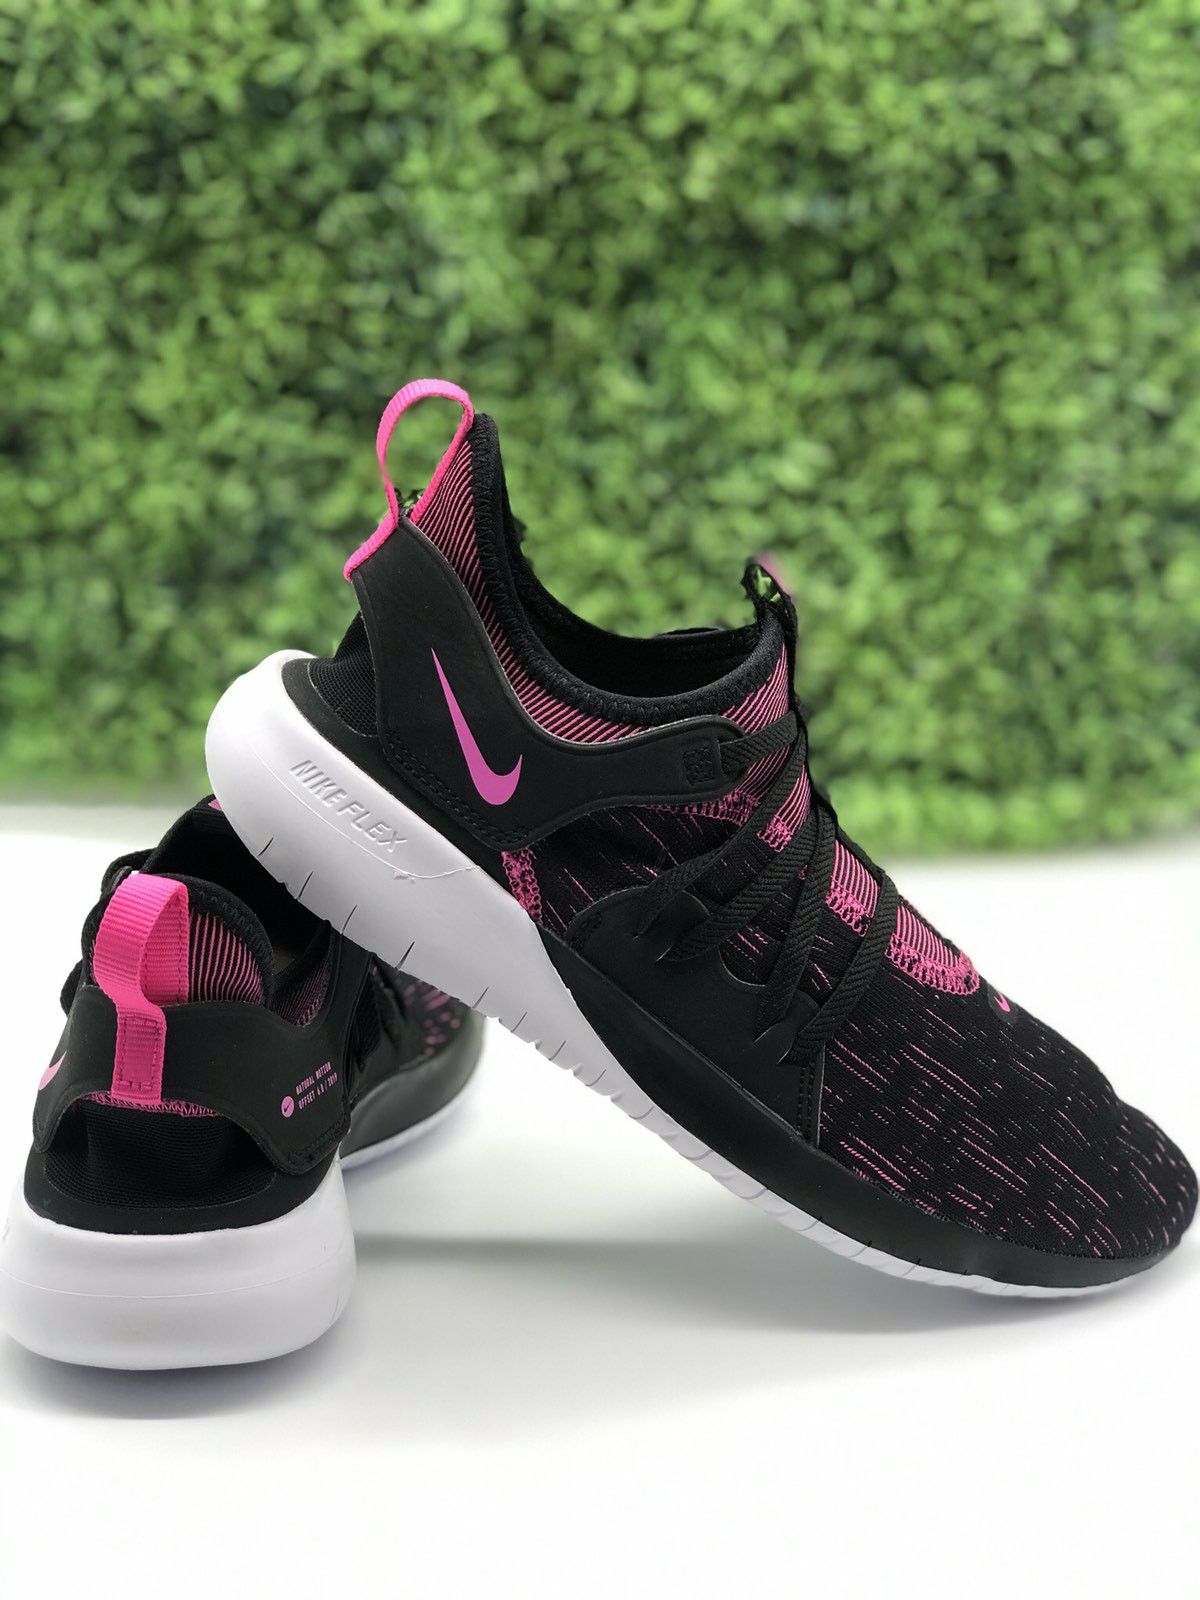 Nike Running Shoes for Women